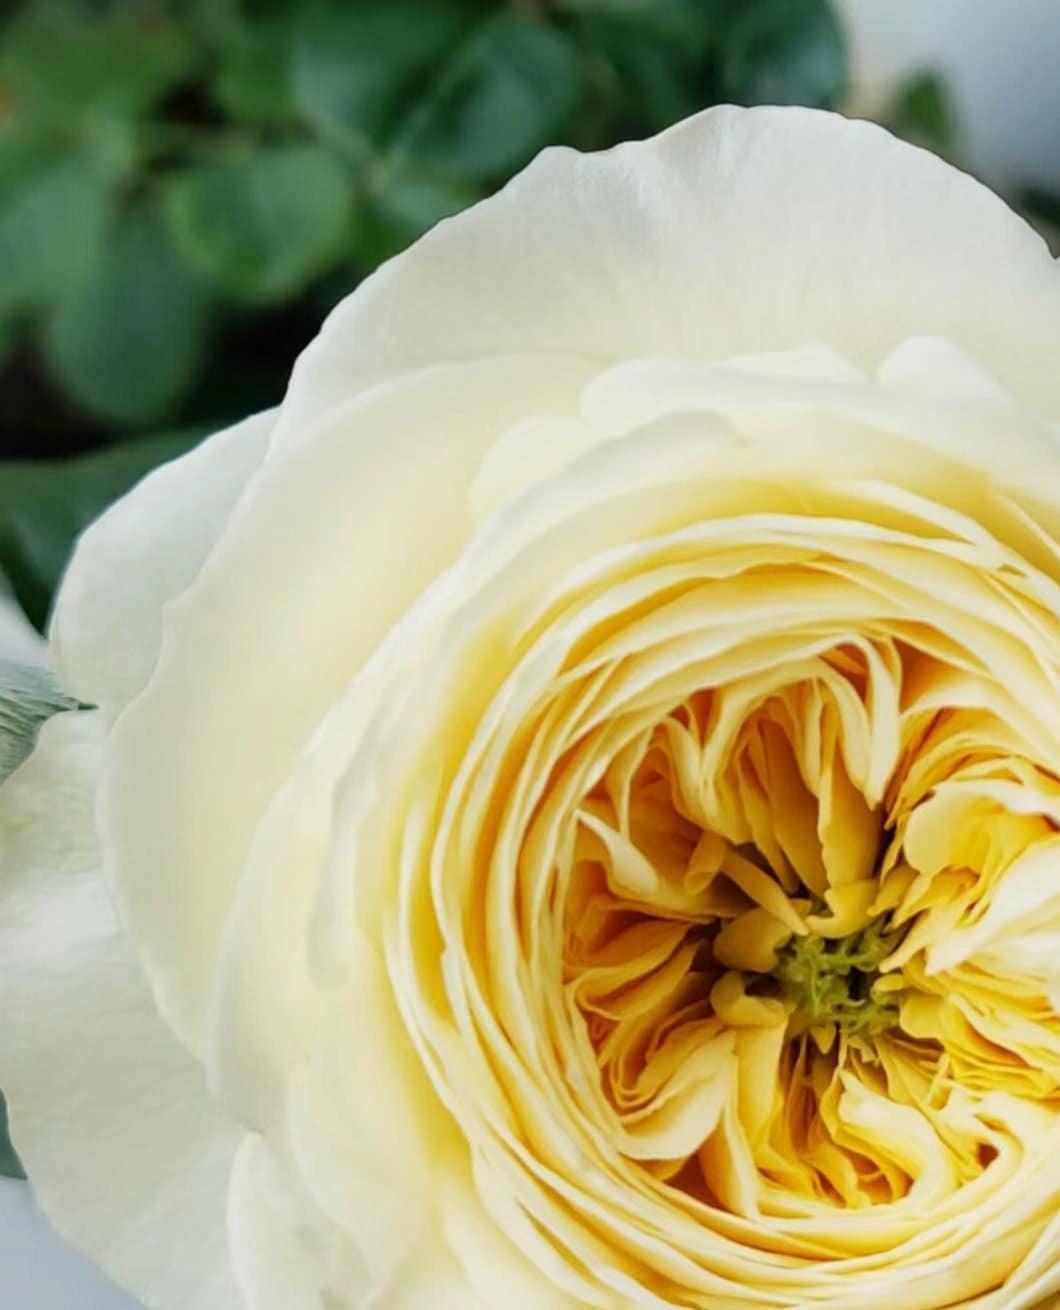 Rose 'Royal Park' (皇家园林) (1 Gal+ Live Plant) Shrub Rose